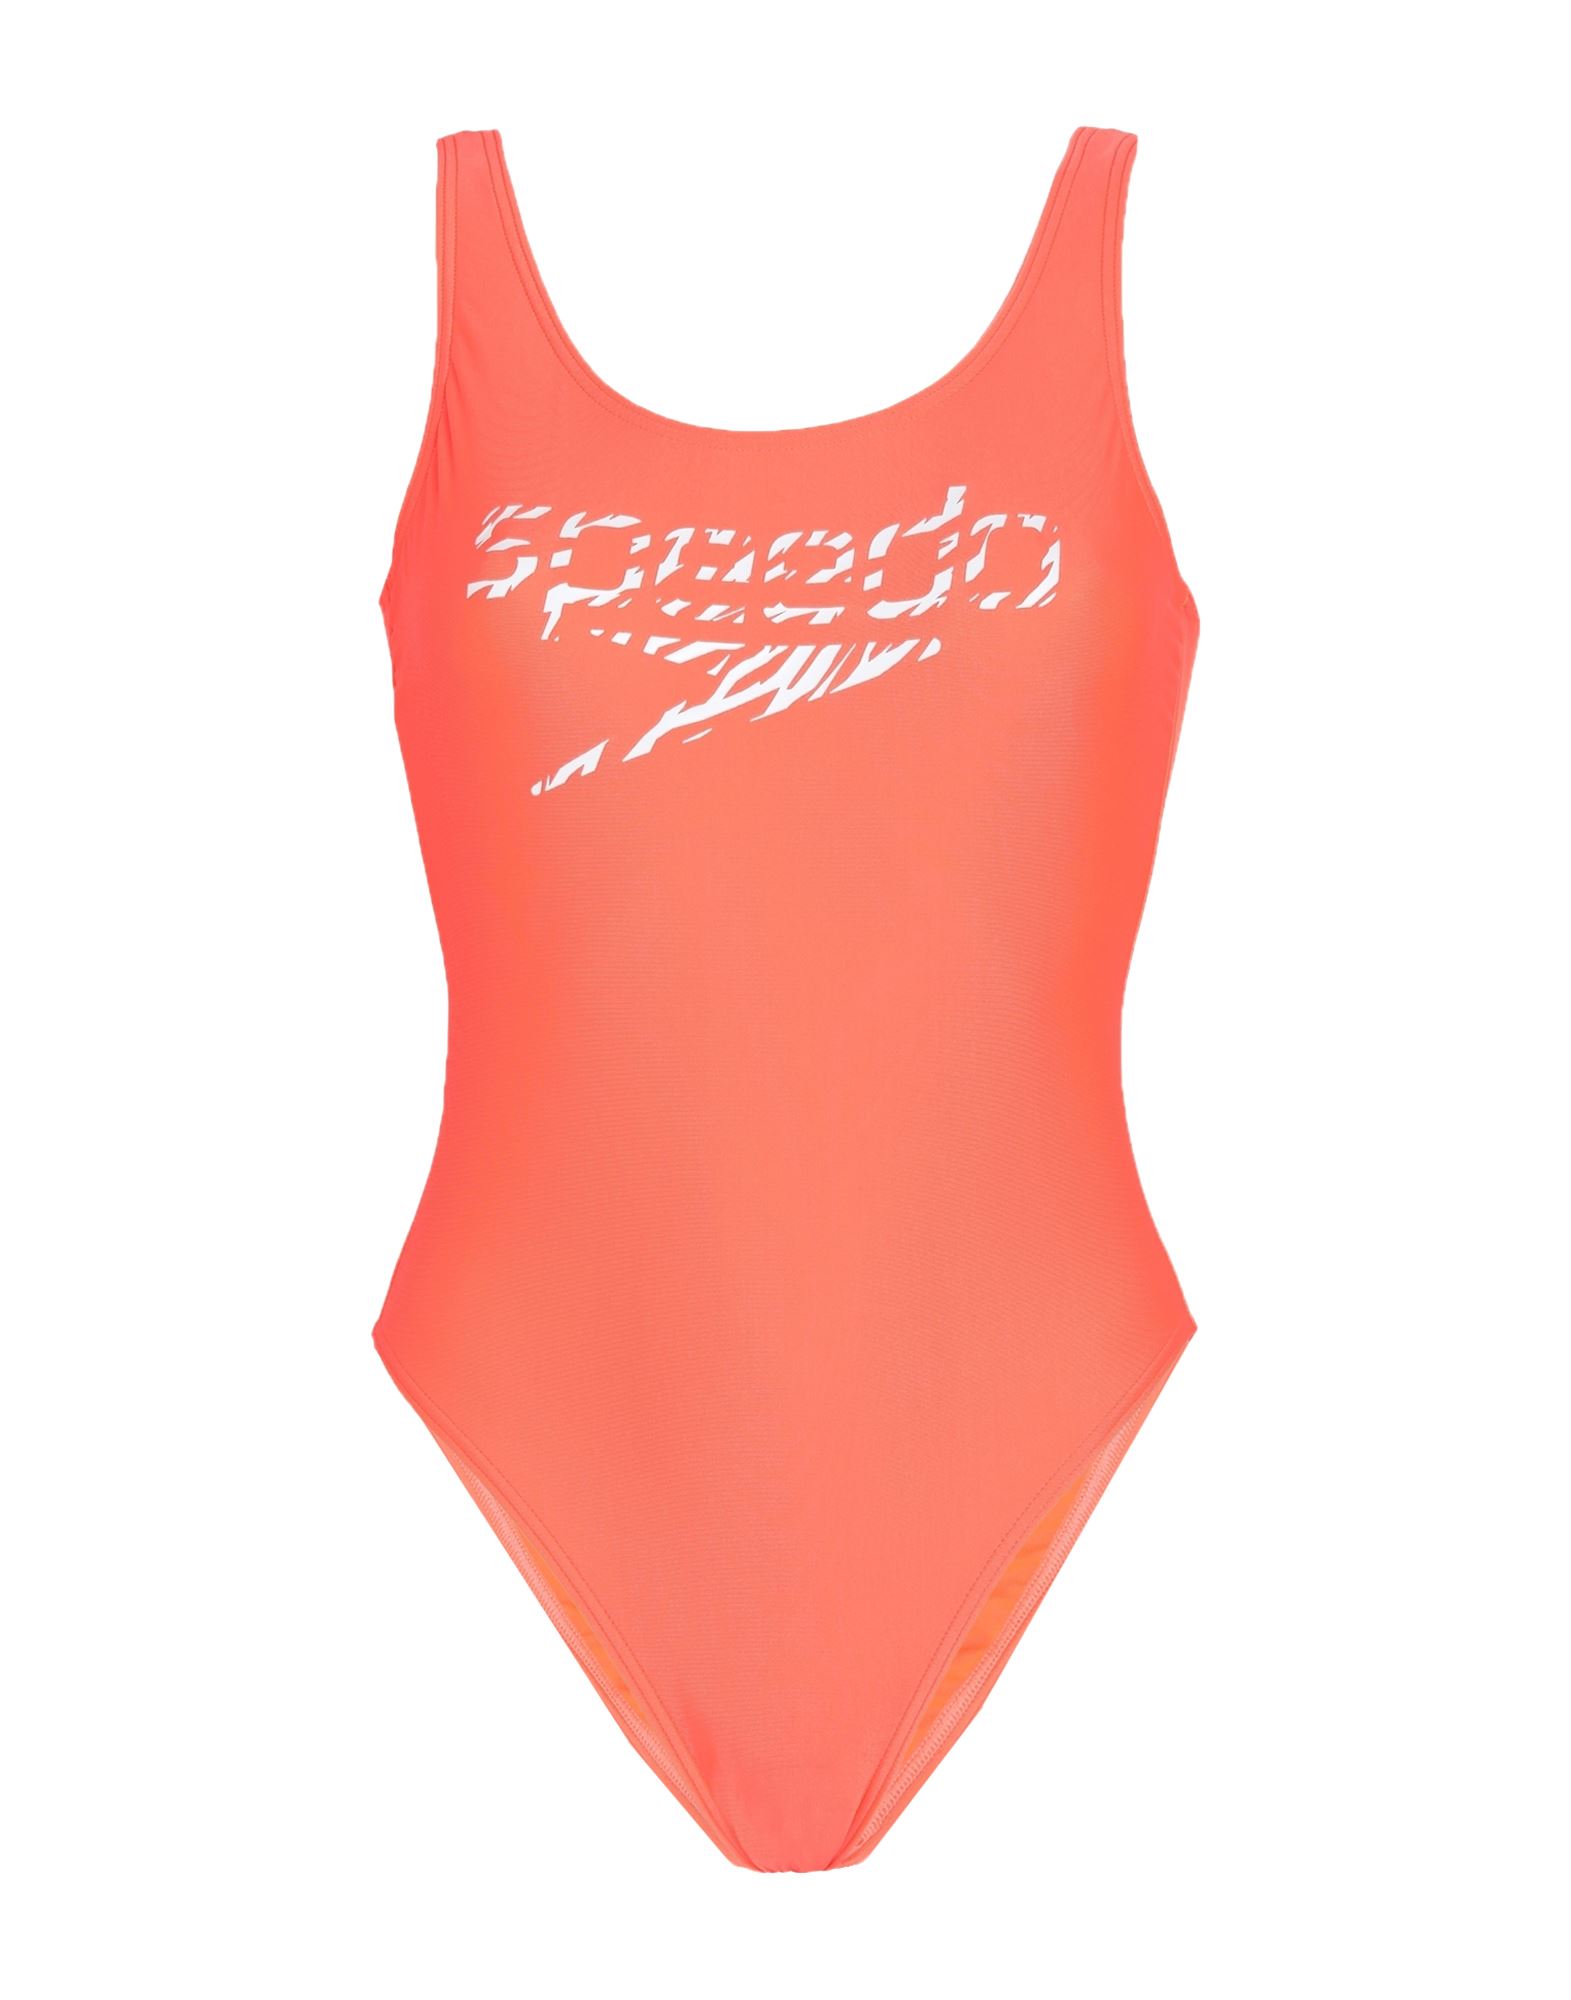 Speedo One Piece Swimsuits In Orange Modesens 4300